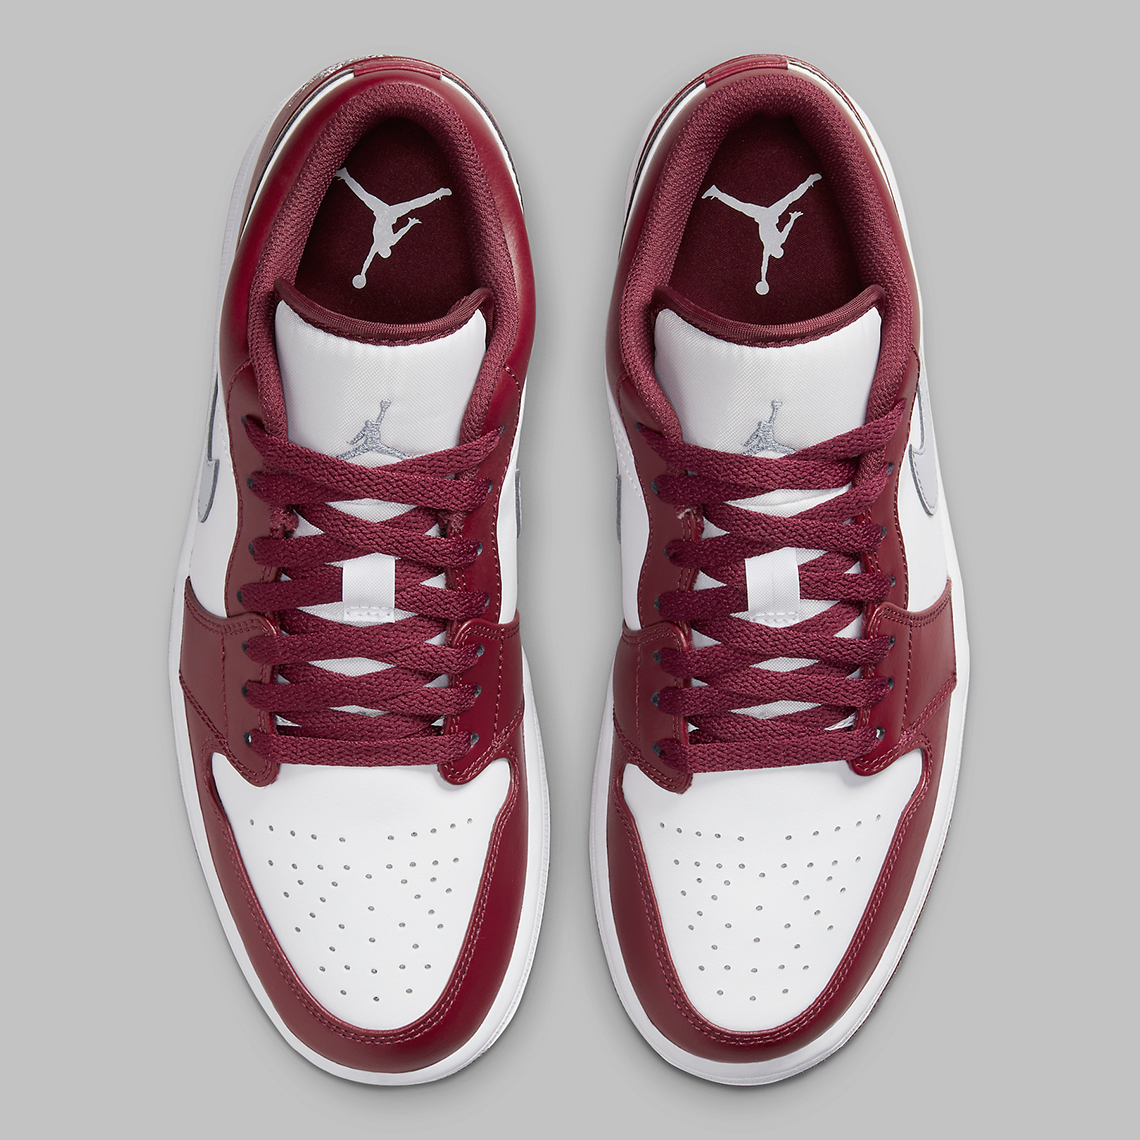 Jordan Air Jordan Retro 10 Sneakers Weiß Low Bordeaux 553558 615 6